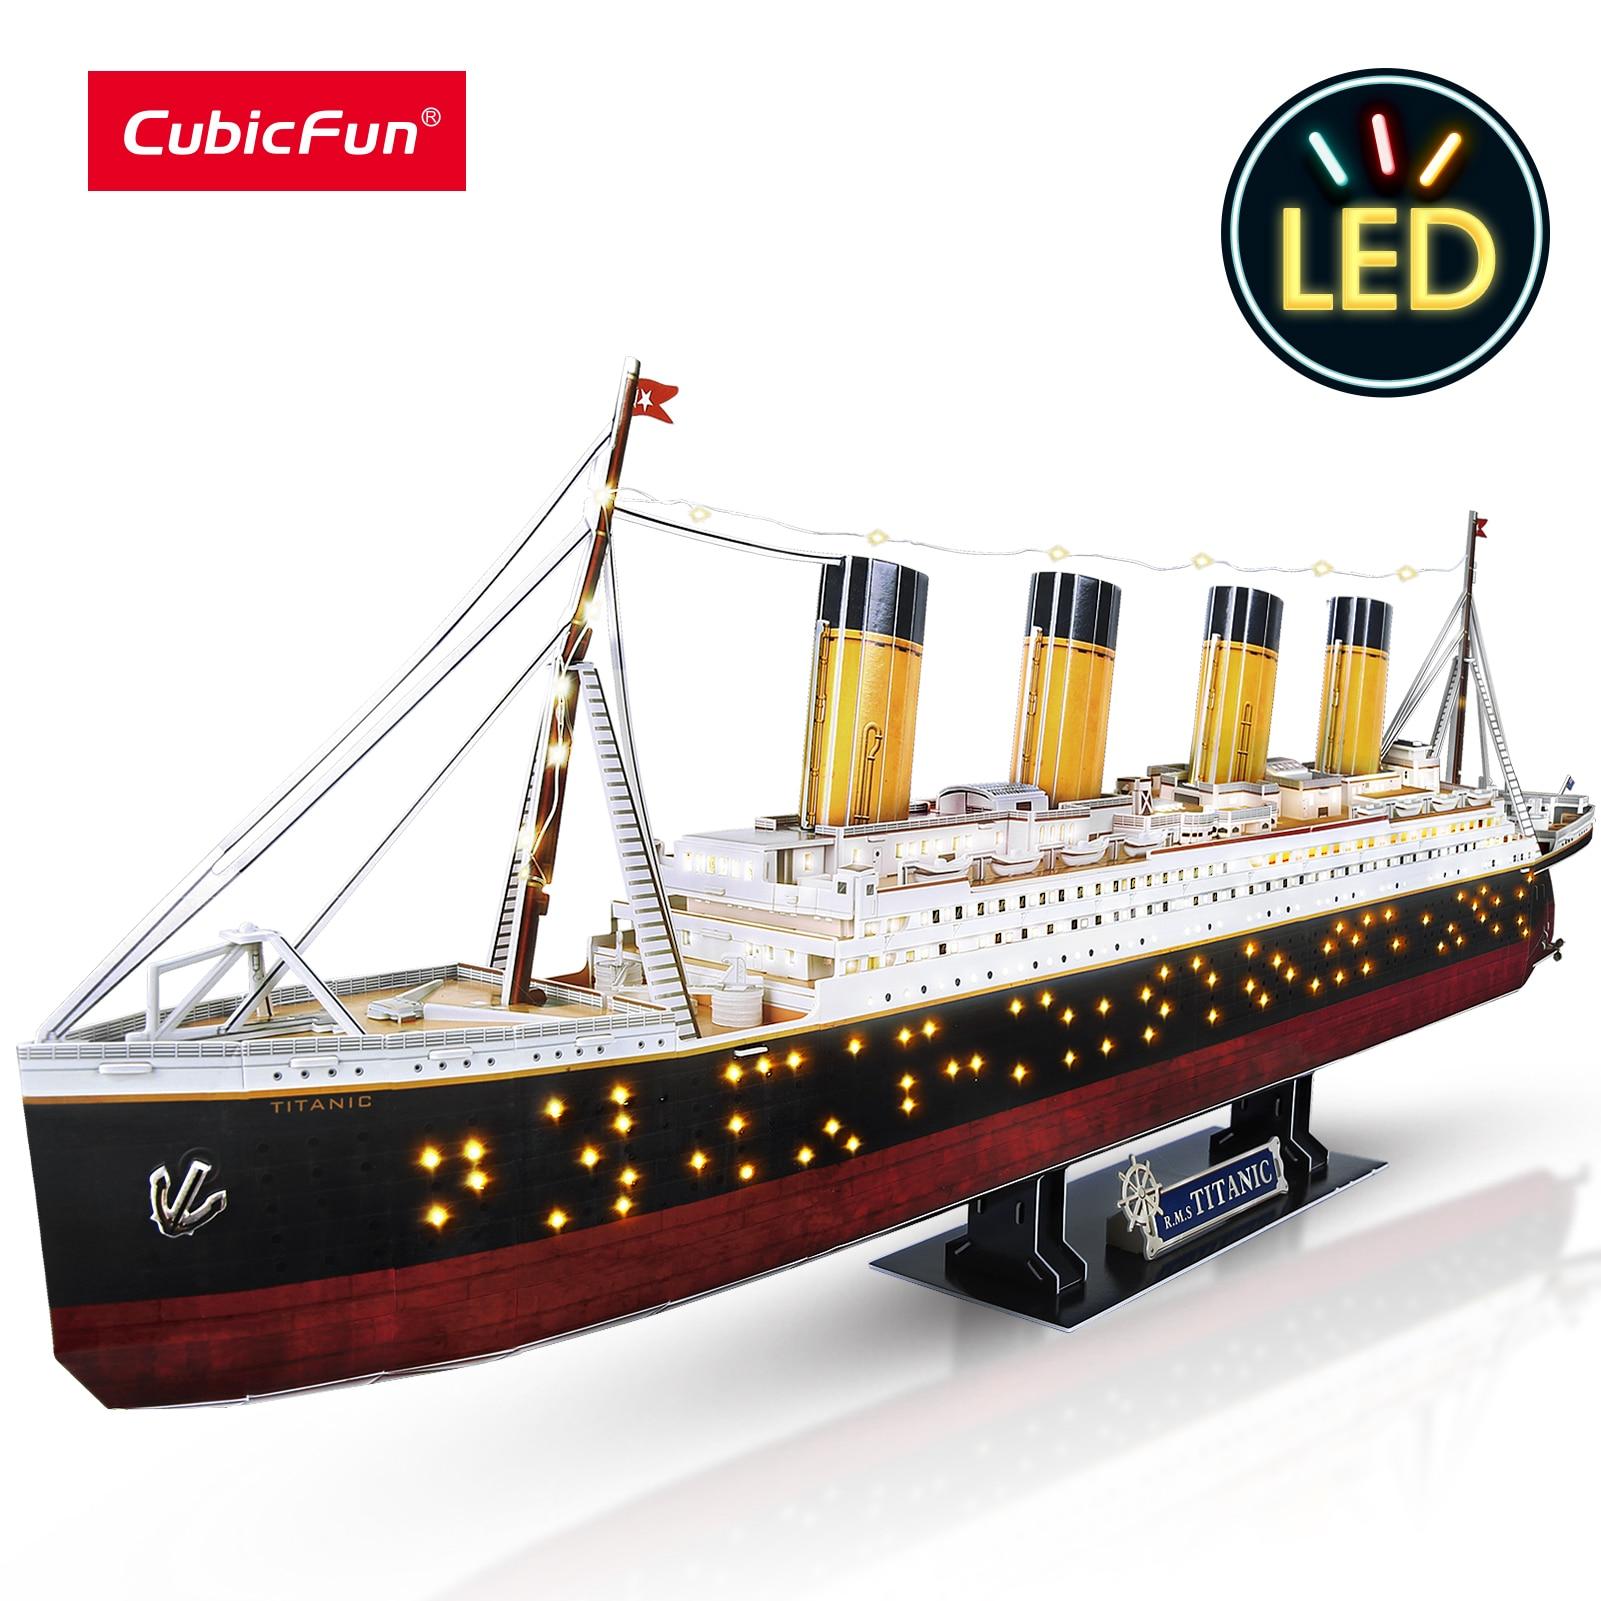 CubicFun-3D-Puzzles-for-Adults-LED-Titanic-Ship-Model-266pcs-Cruise-Jigsaw-Toys-Lighting-Building-Kits.jpg